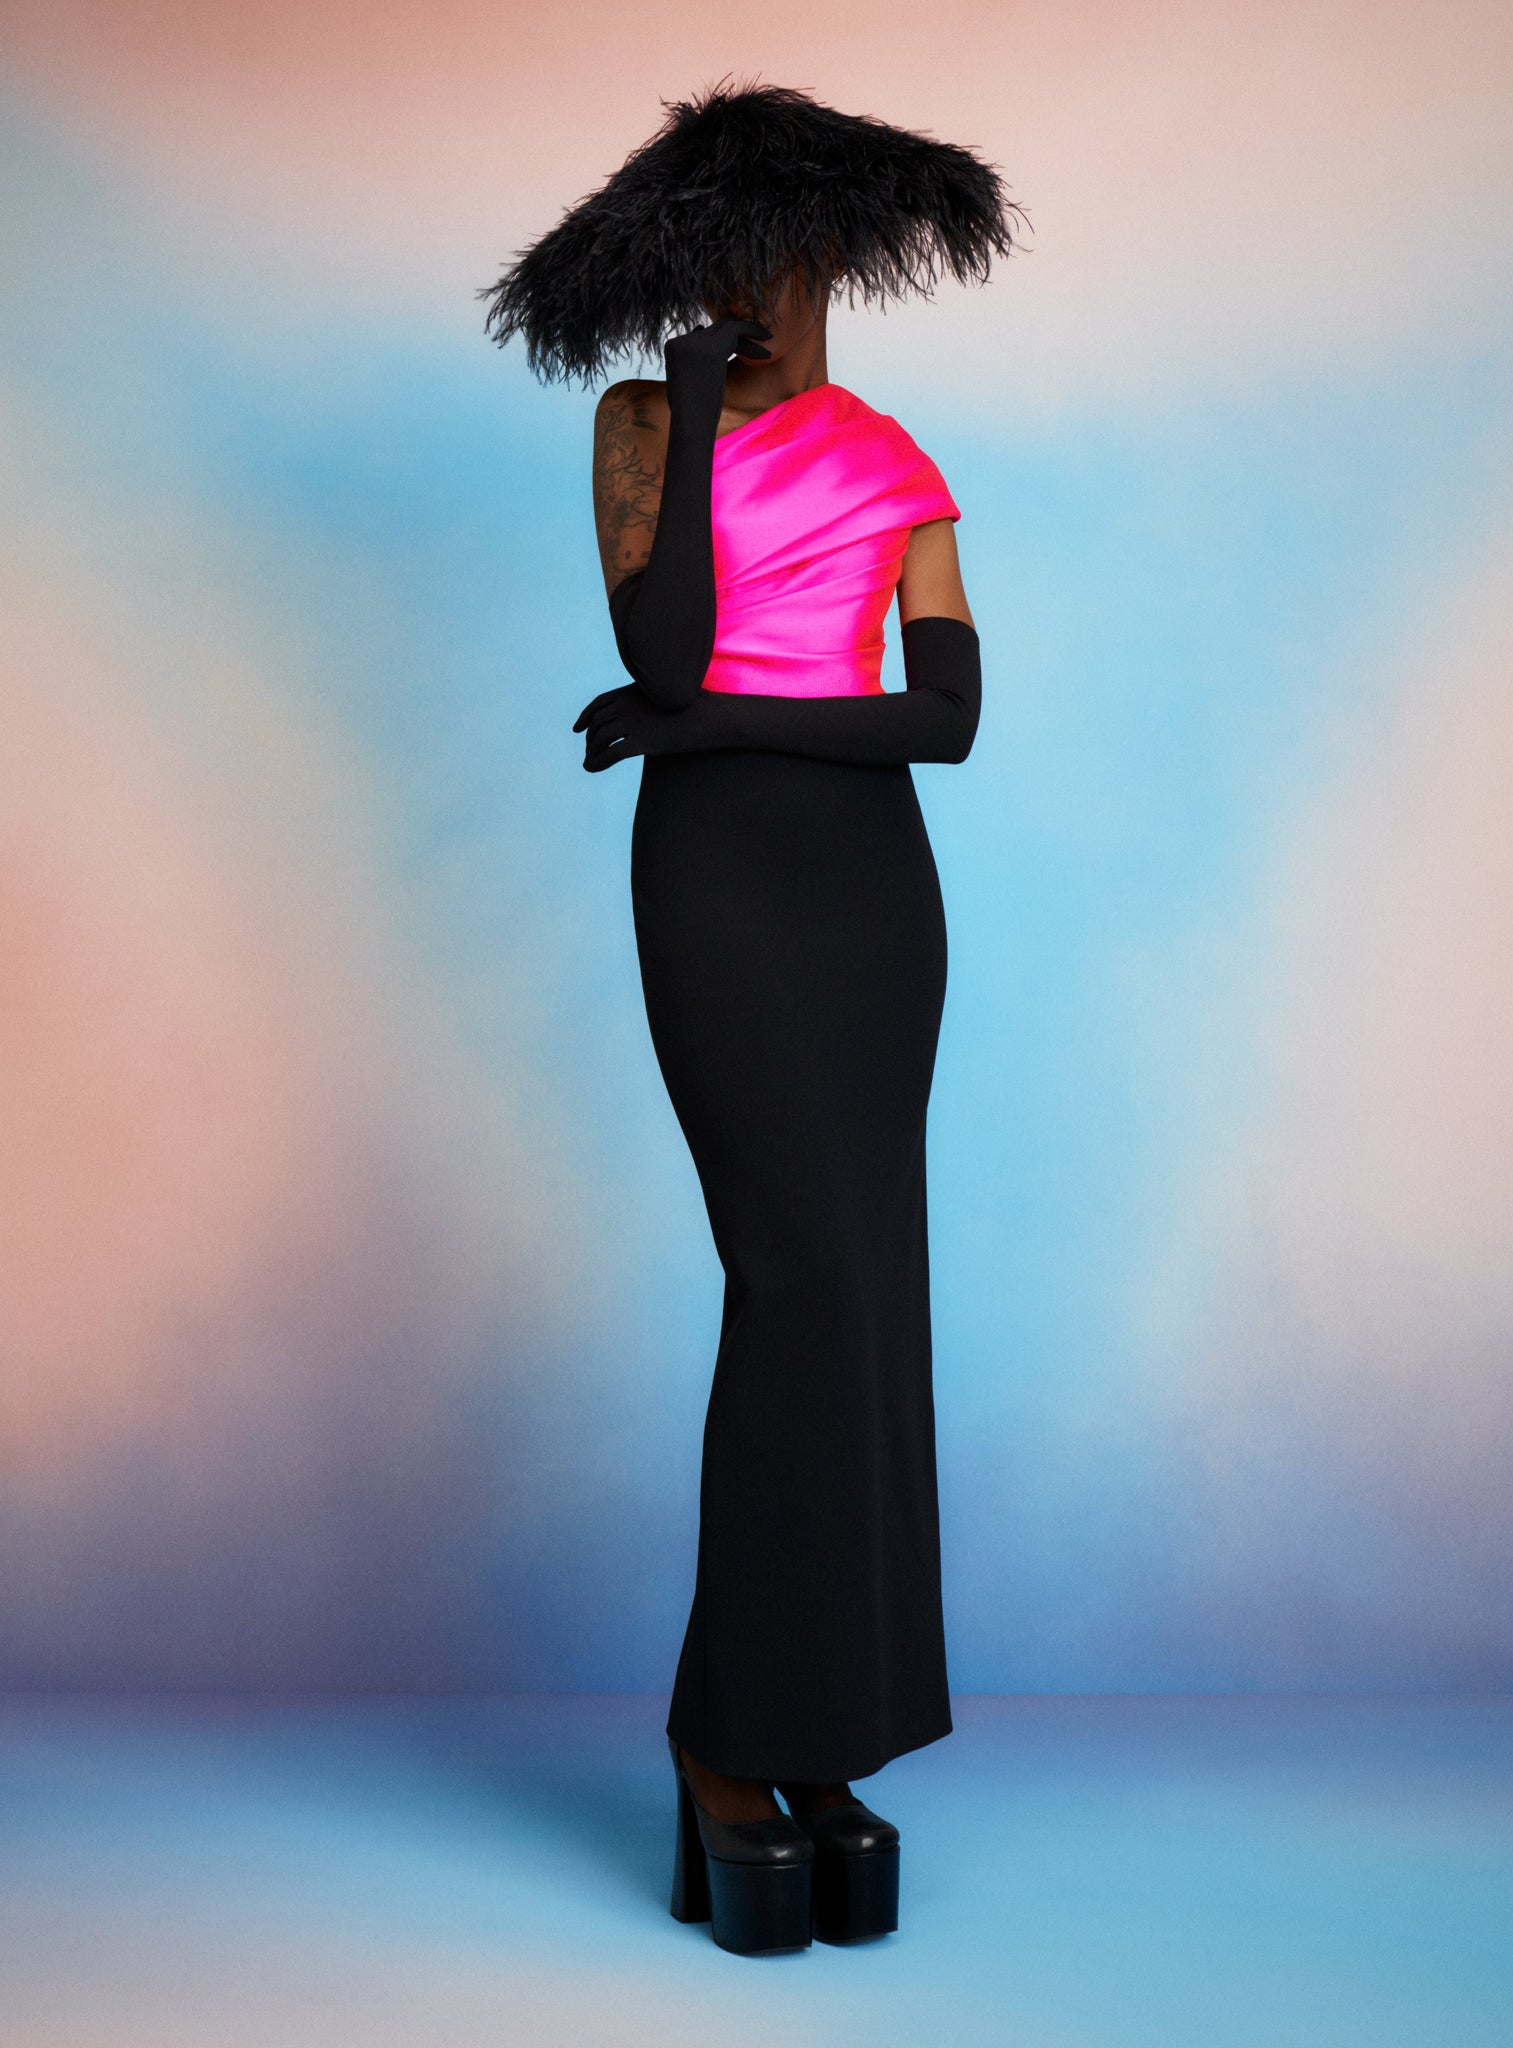 The Selia Maxi Dress in Hot Pink & Black